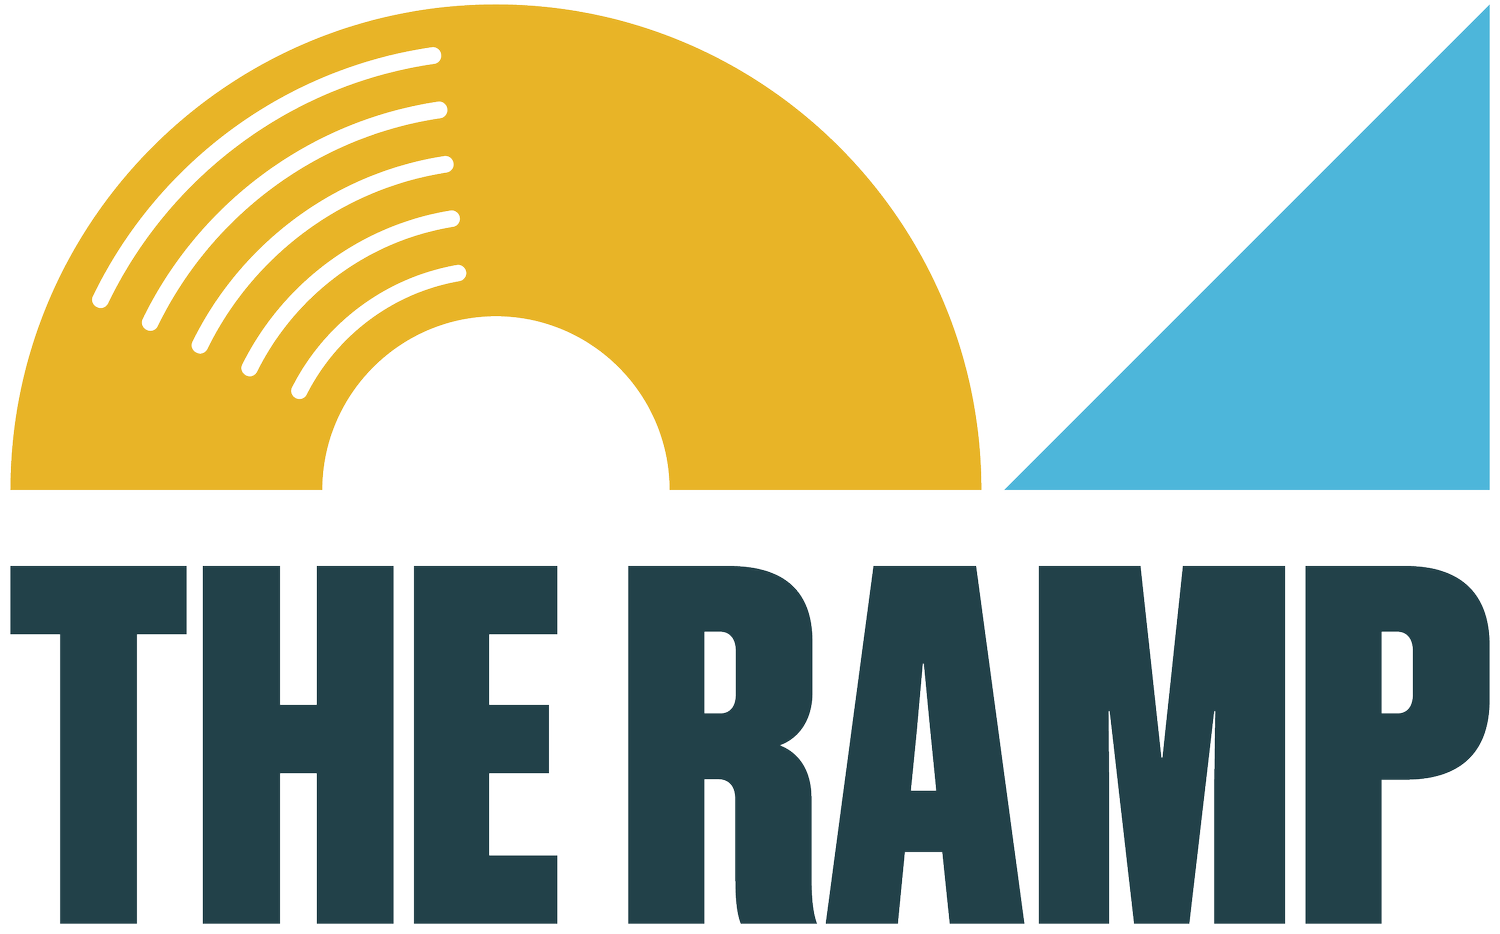 The Ramp